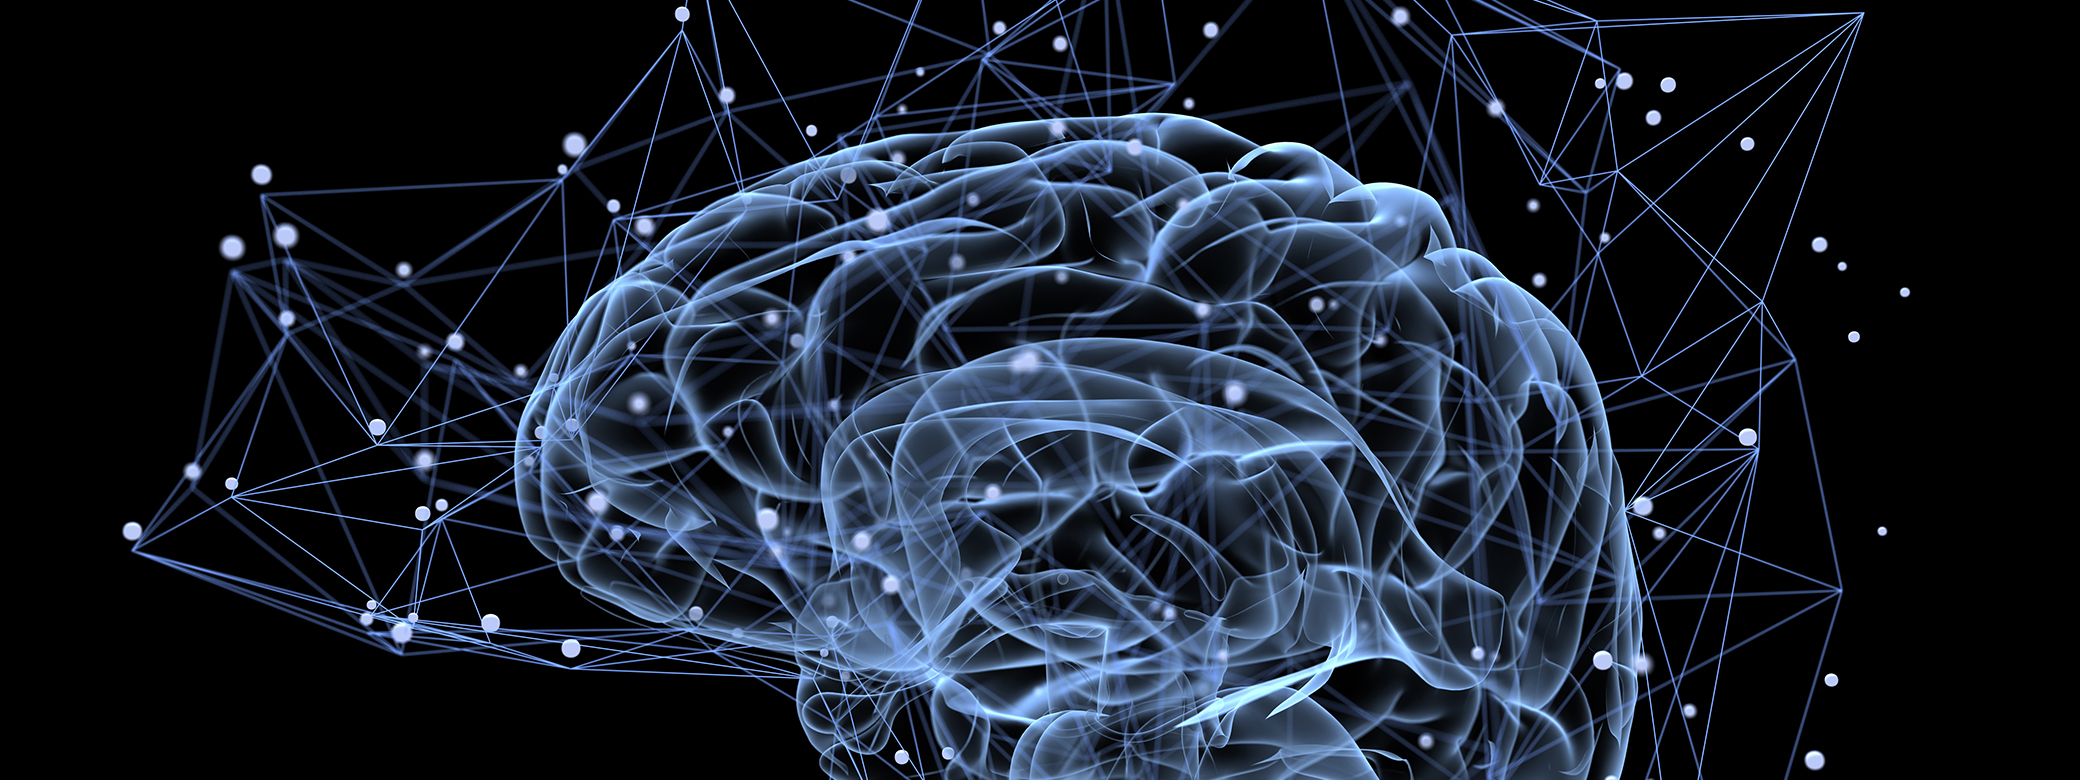 illustration of brain wiring lit up against black background